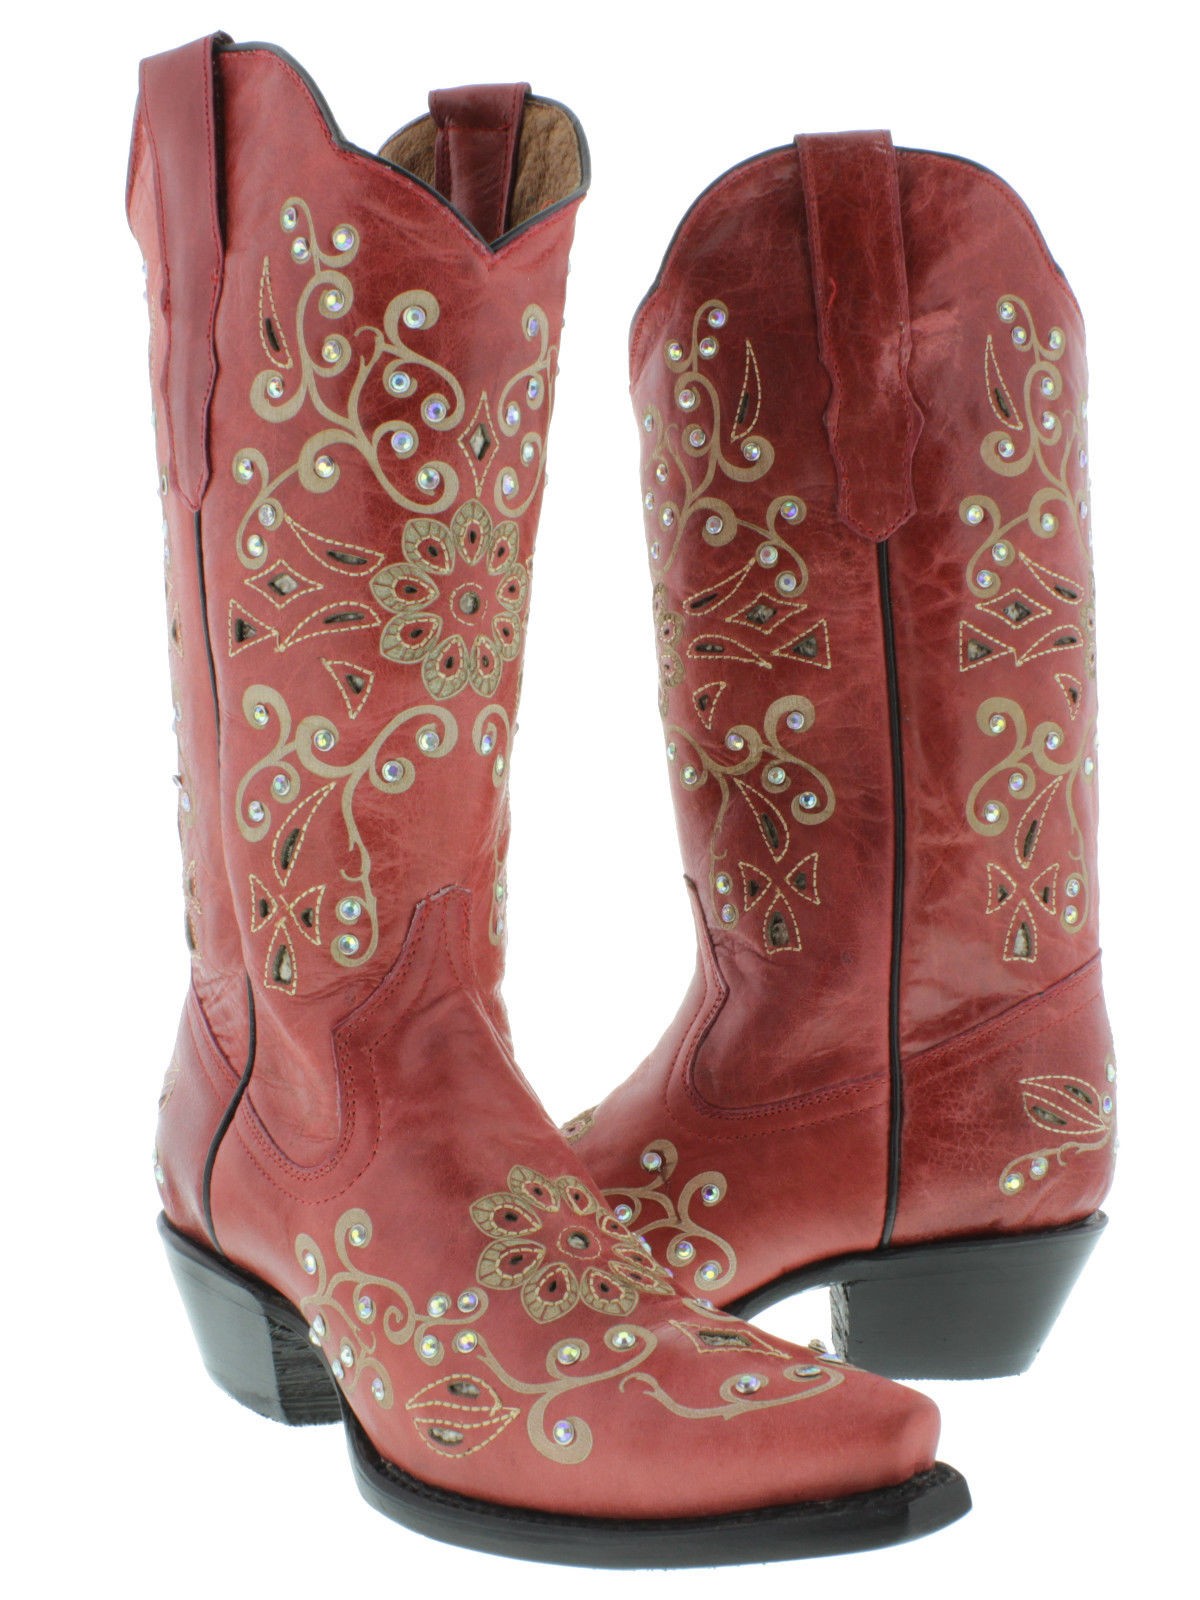 Rhinestone Cowgirl Boots